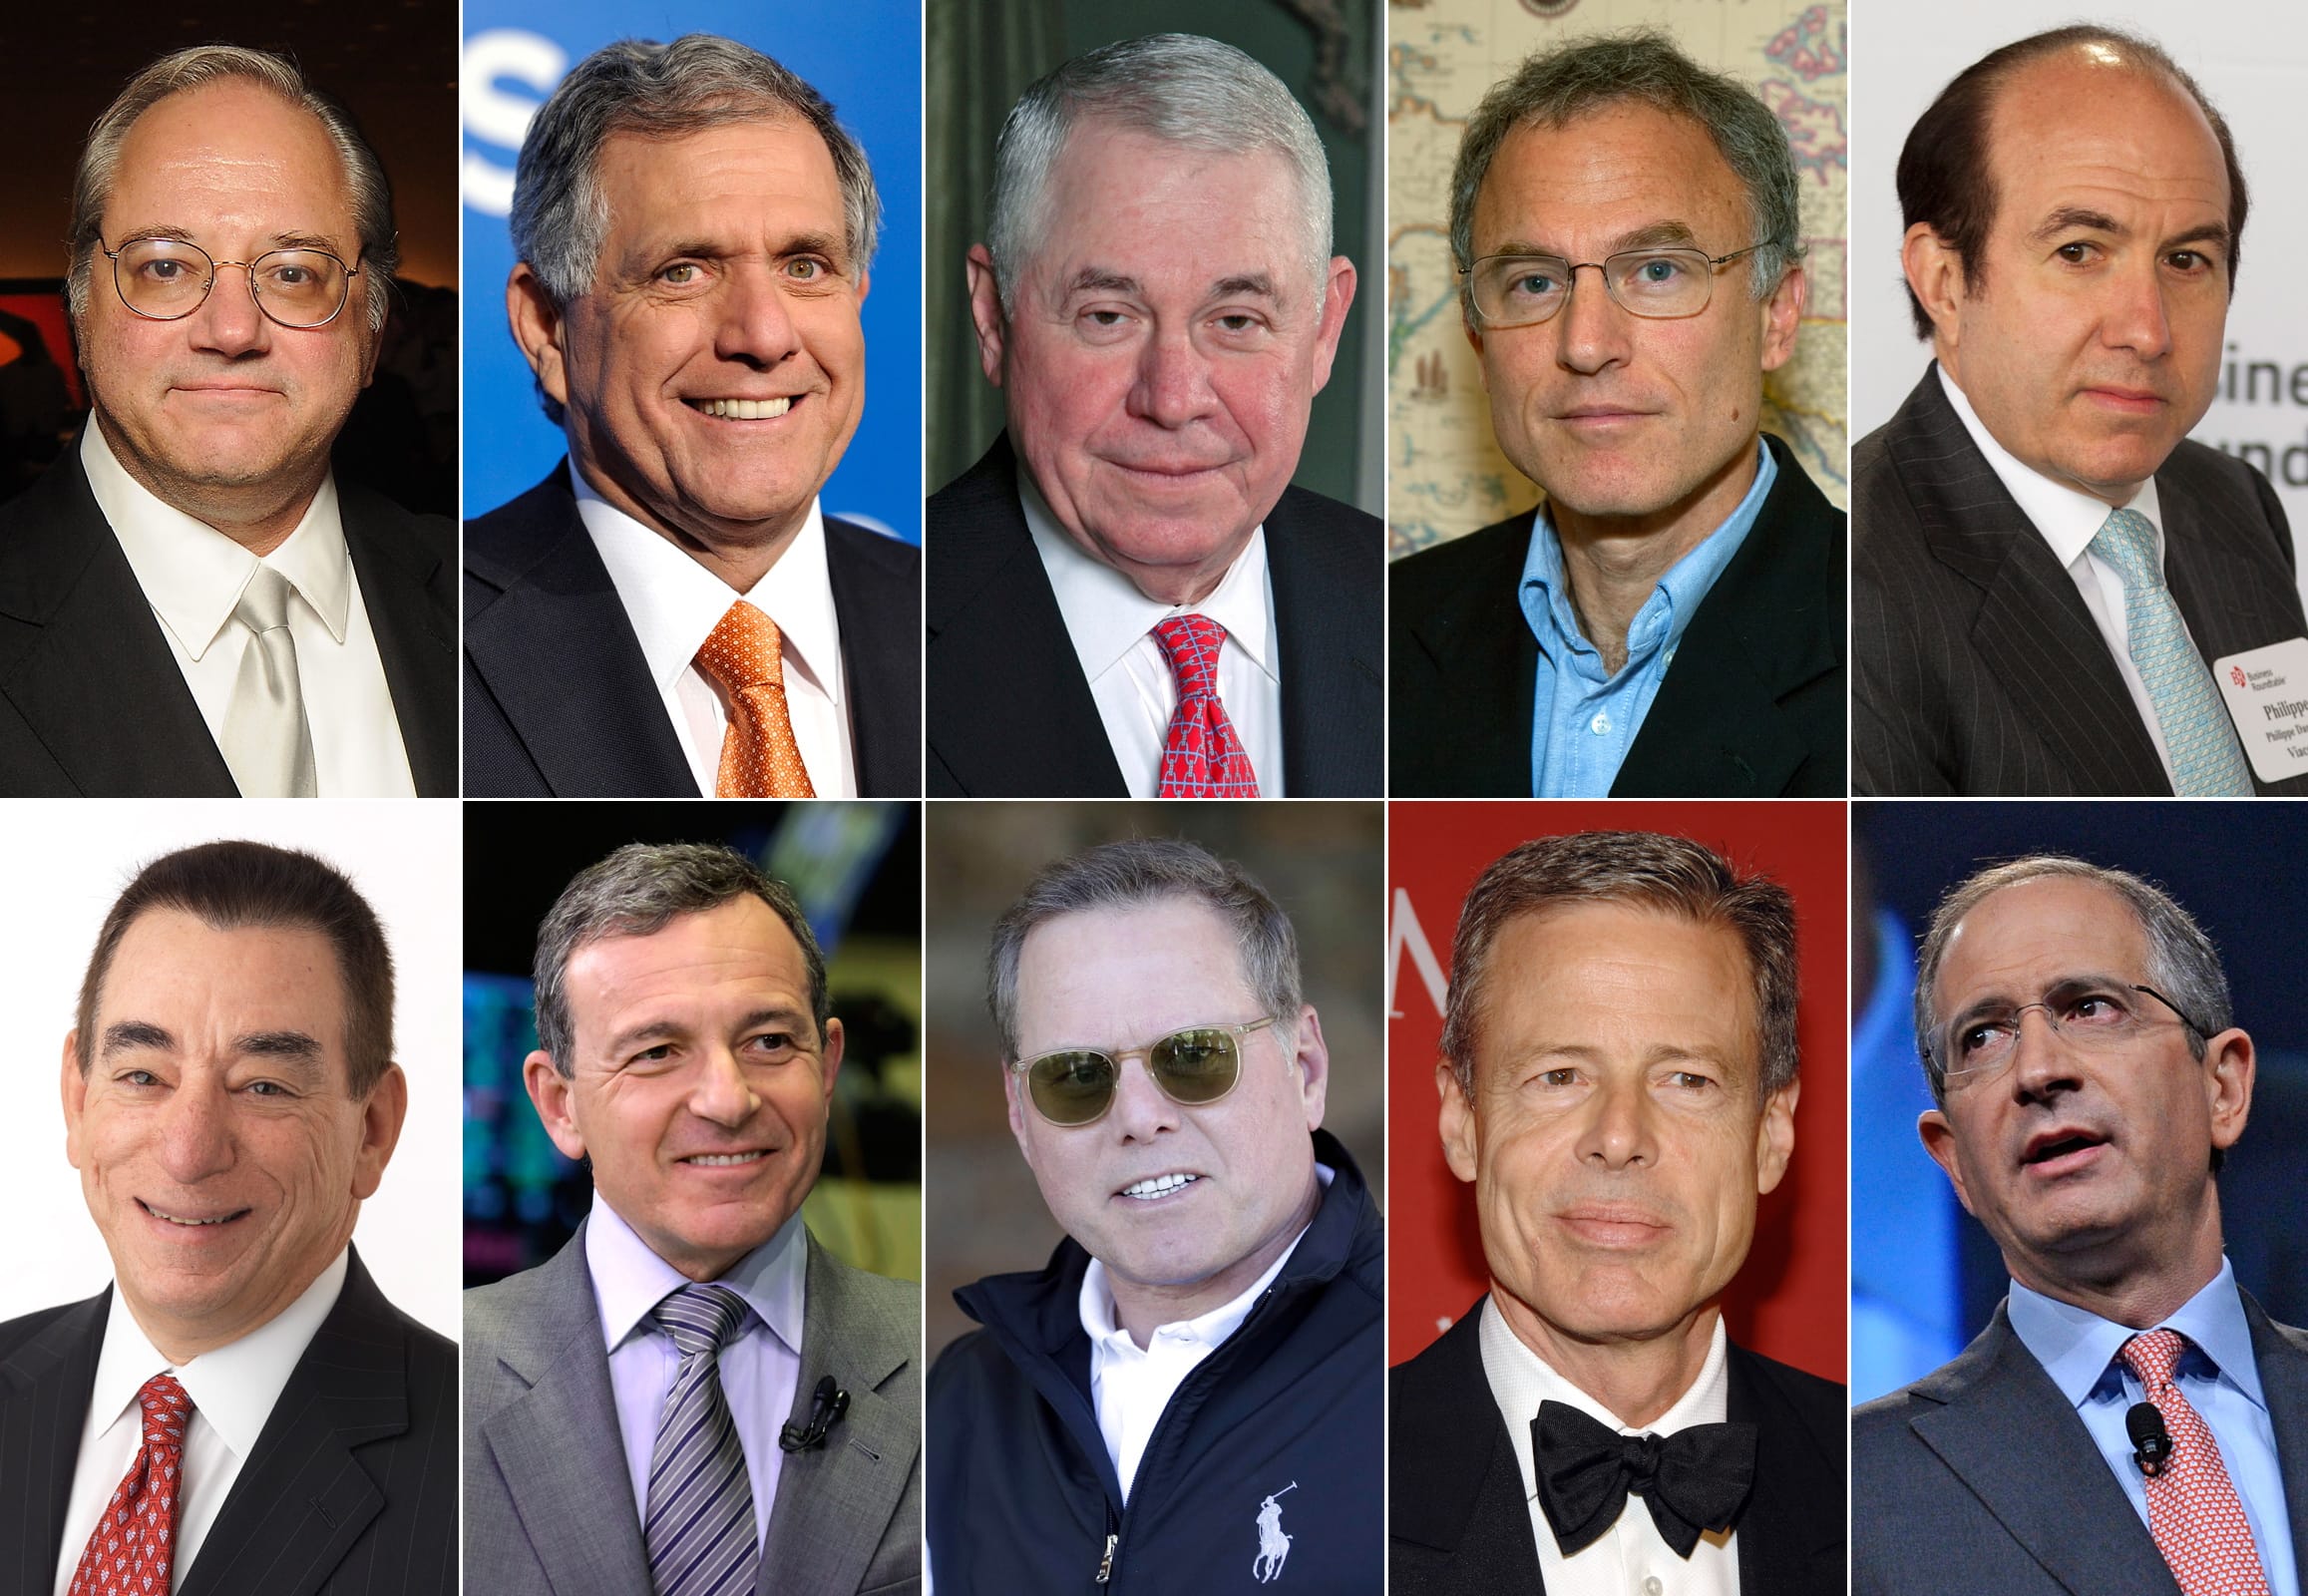 The 10 highest-paid CEOs of 2013: Top row, from left: Anthony Petrello, Nabors Industries, $68.3 million; Leslie Moonves, CBS, $65.6 million; Richard Adkerson, Freeport-McMoRan Copper &amp; Gold, $55.3 million; Stephen Kaufer, TripAdvisor, $39 million; and Philippe Dauman, Viacom, $37.2 million.